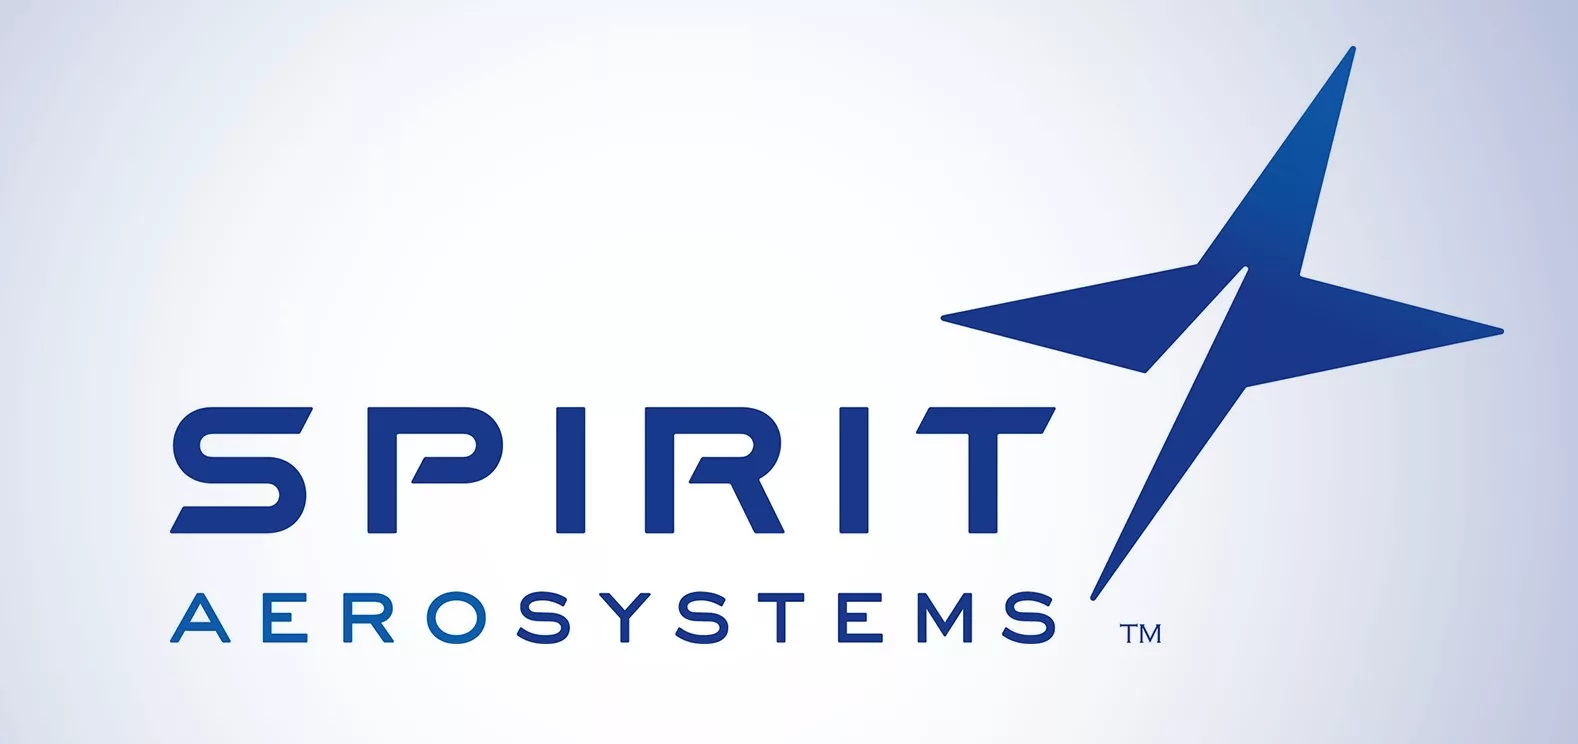 spirit-logo-jpg-6